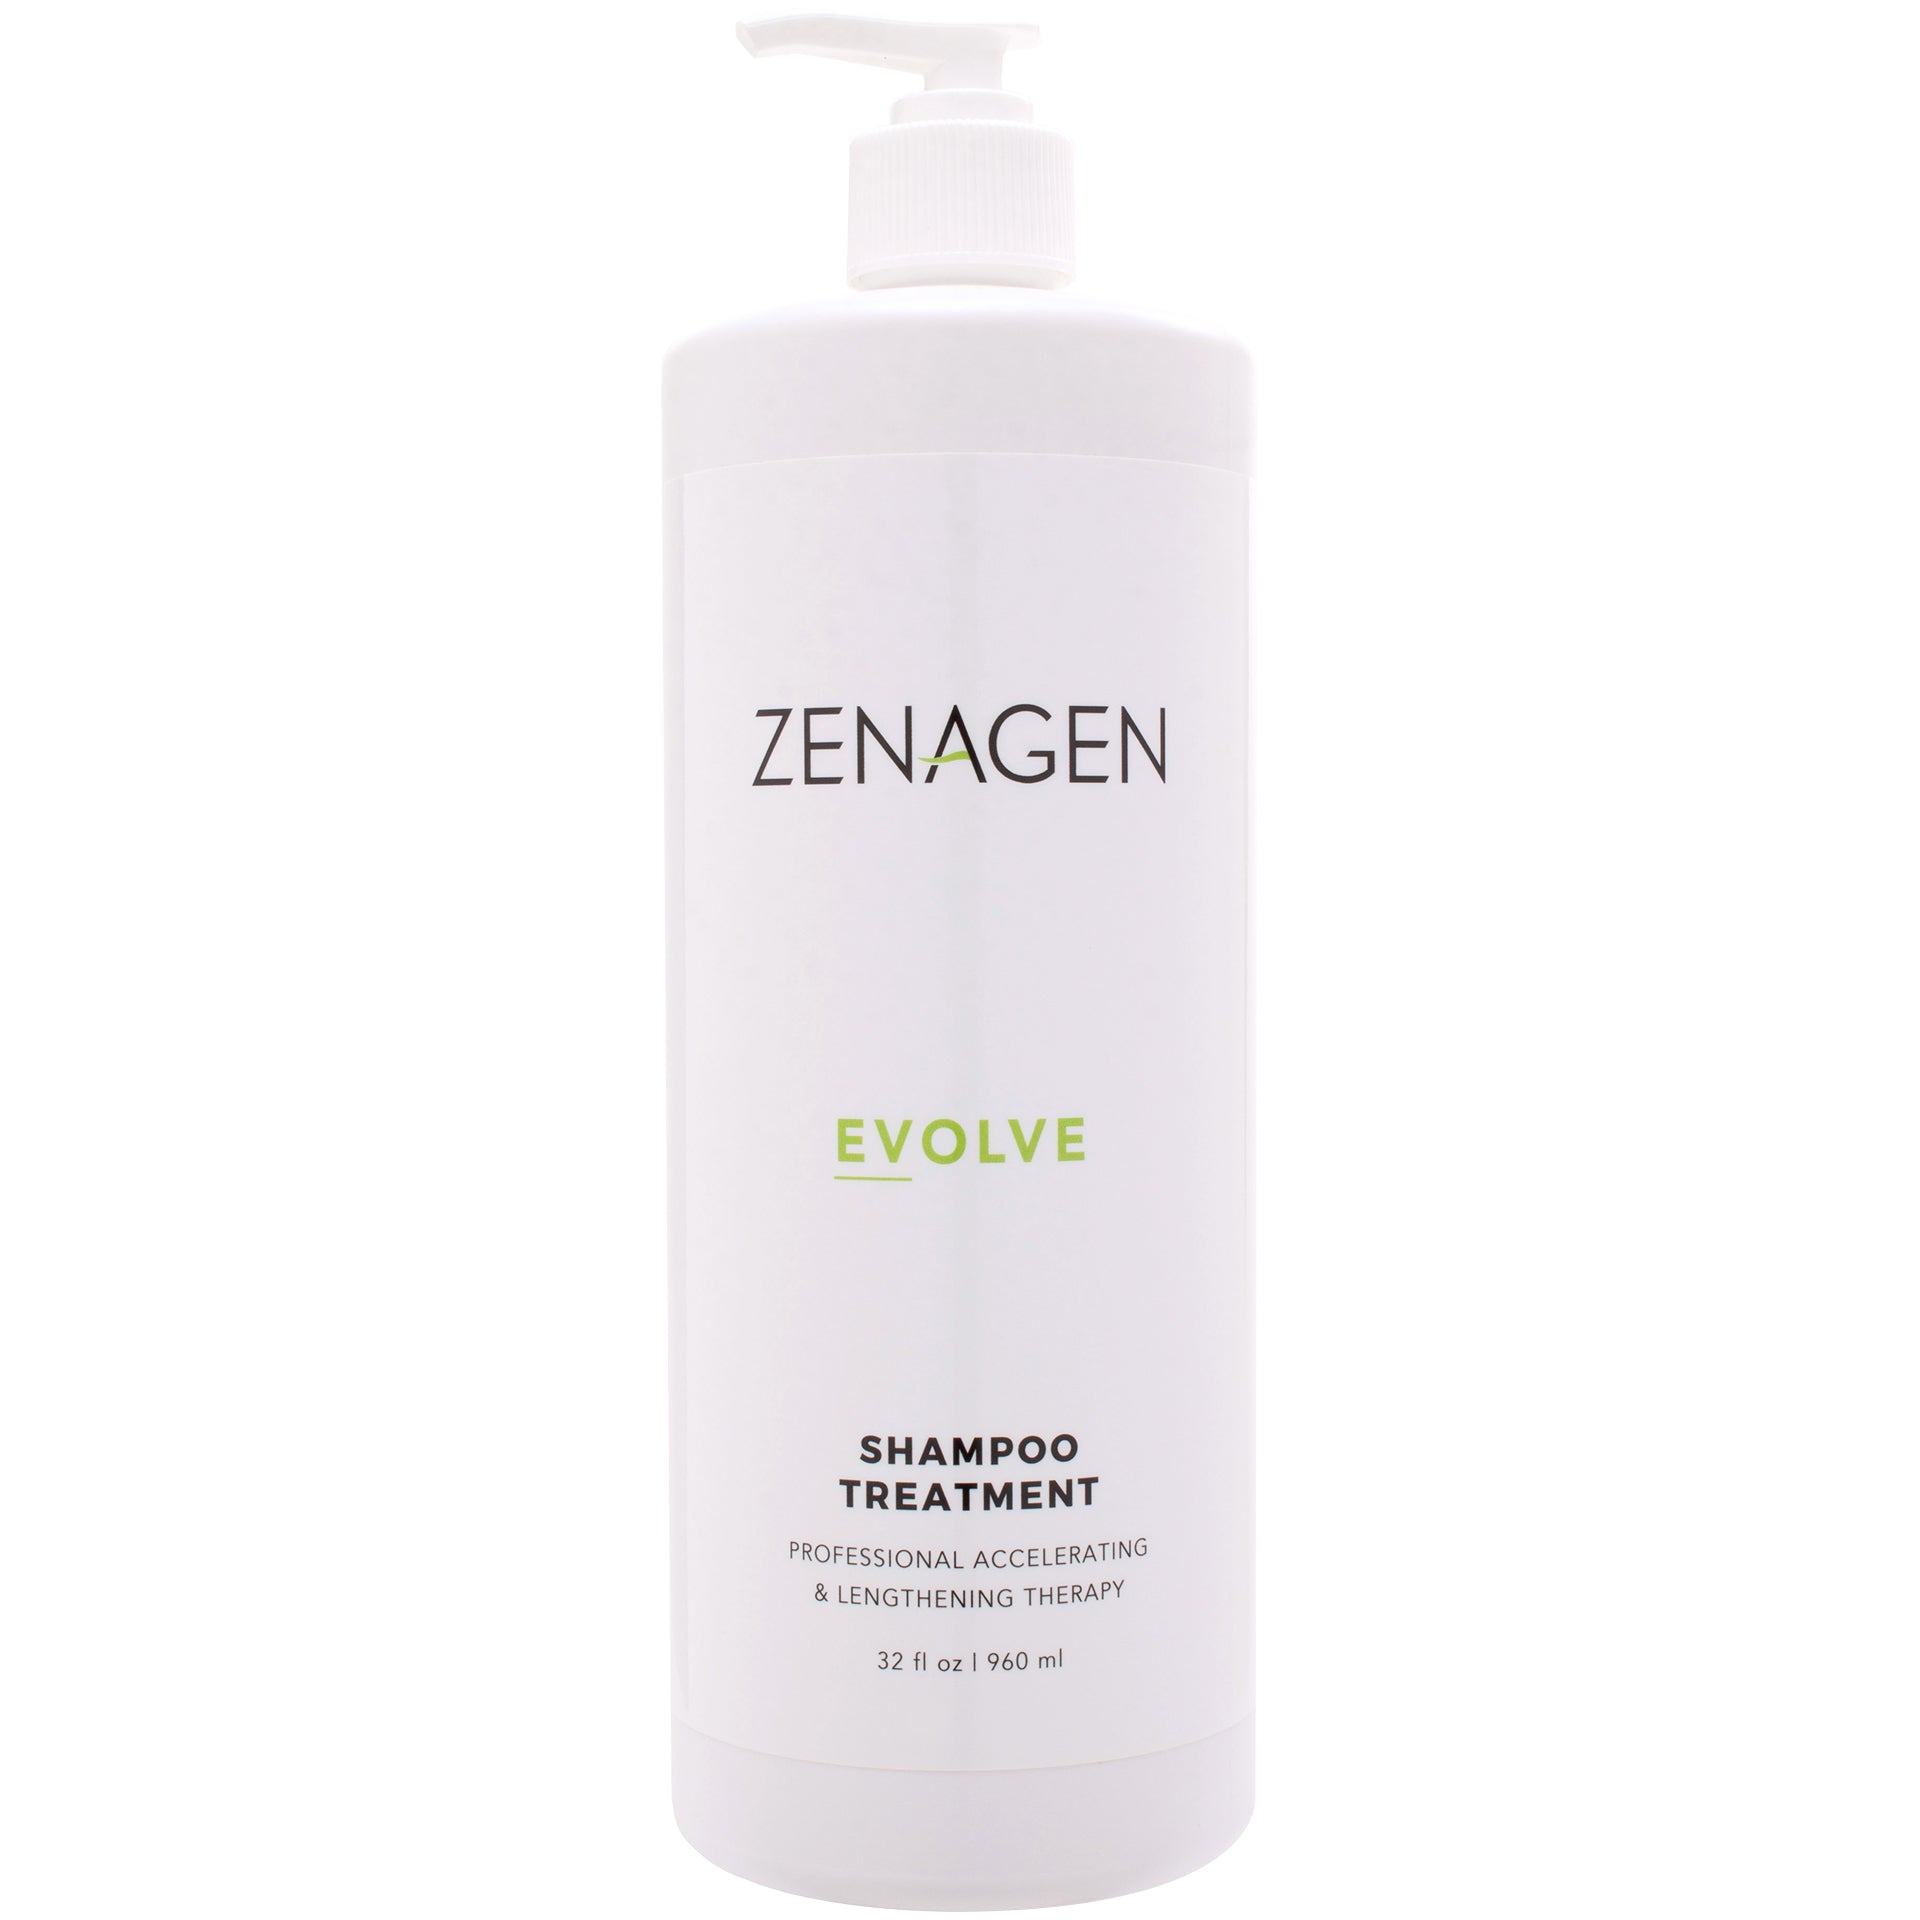 underskud resident modstå Zenagen Evolve Shampoo Treatment Unisex With Pump 32oz